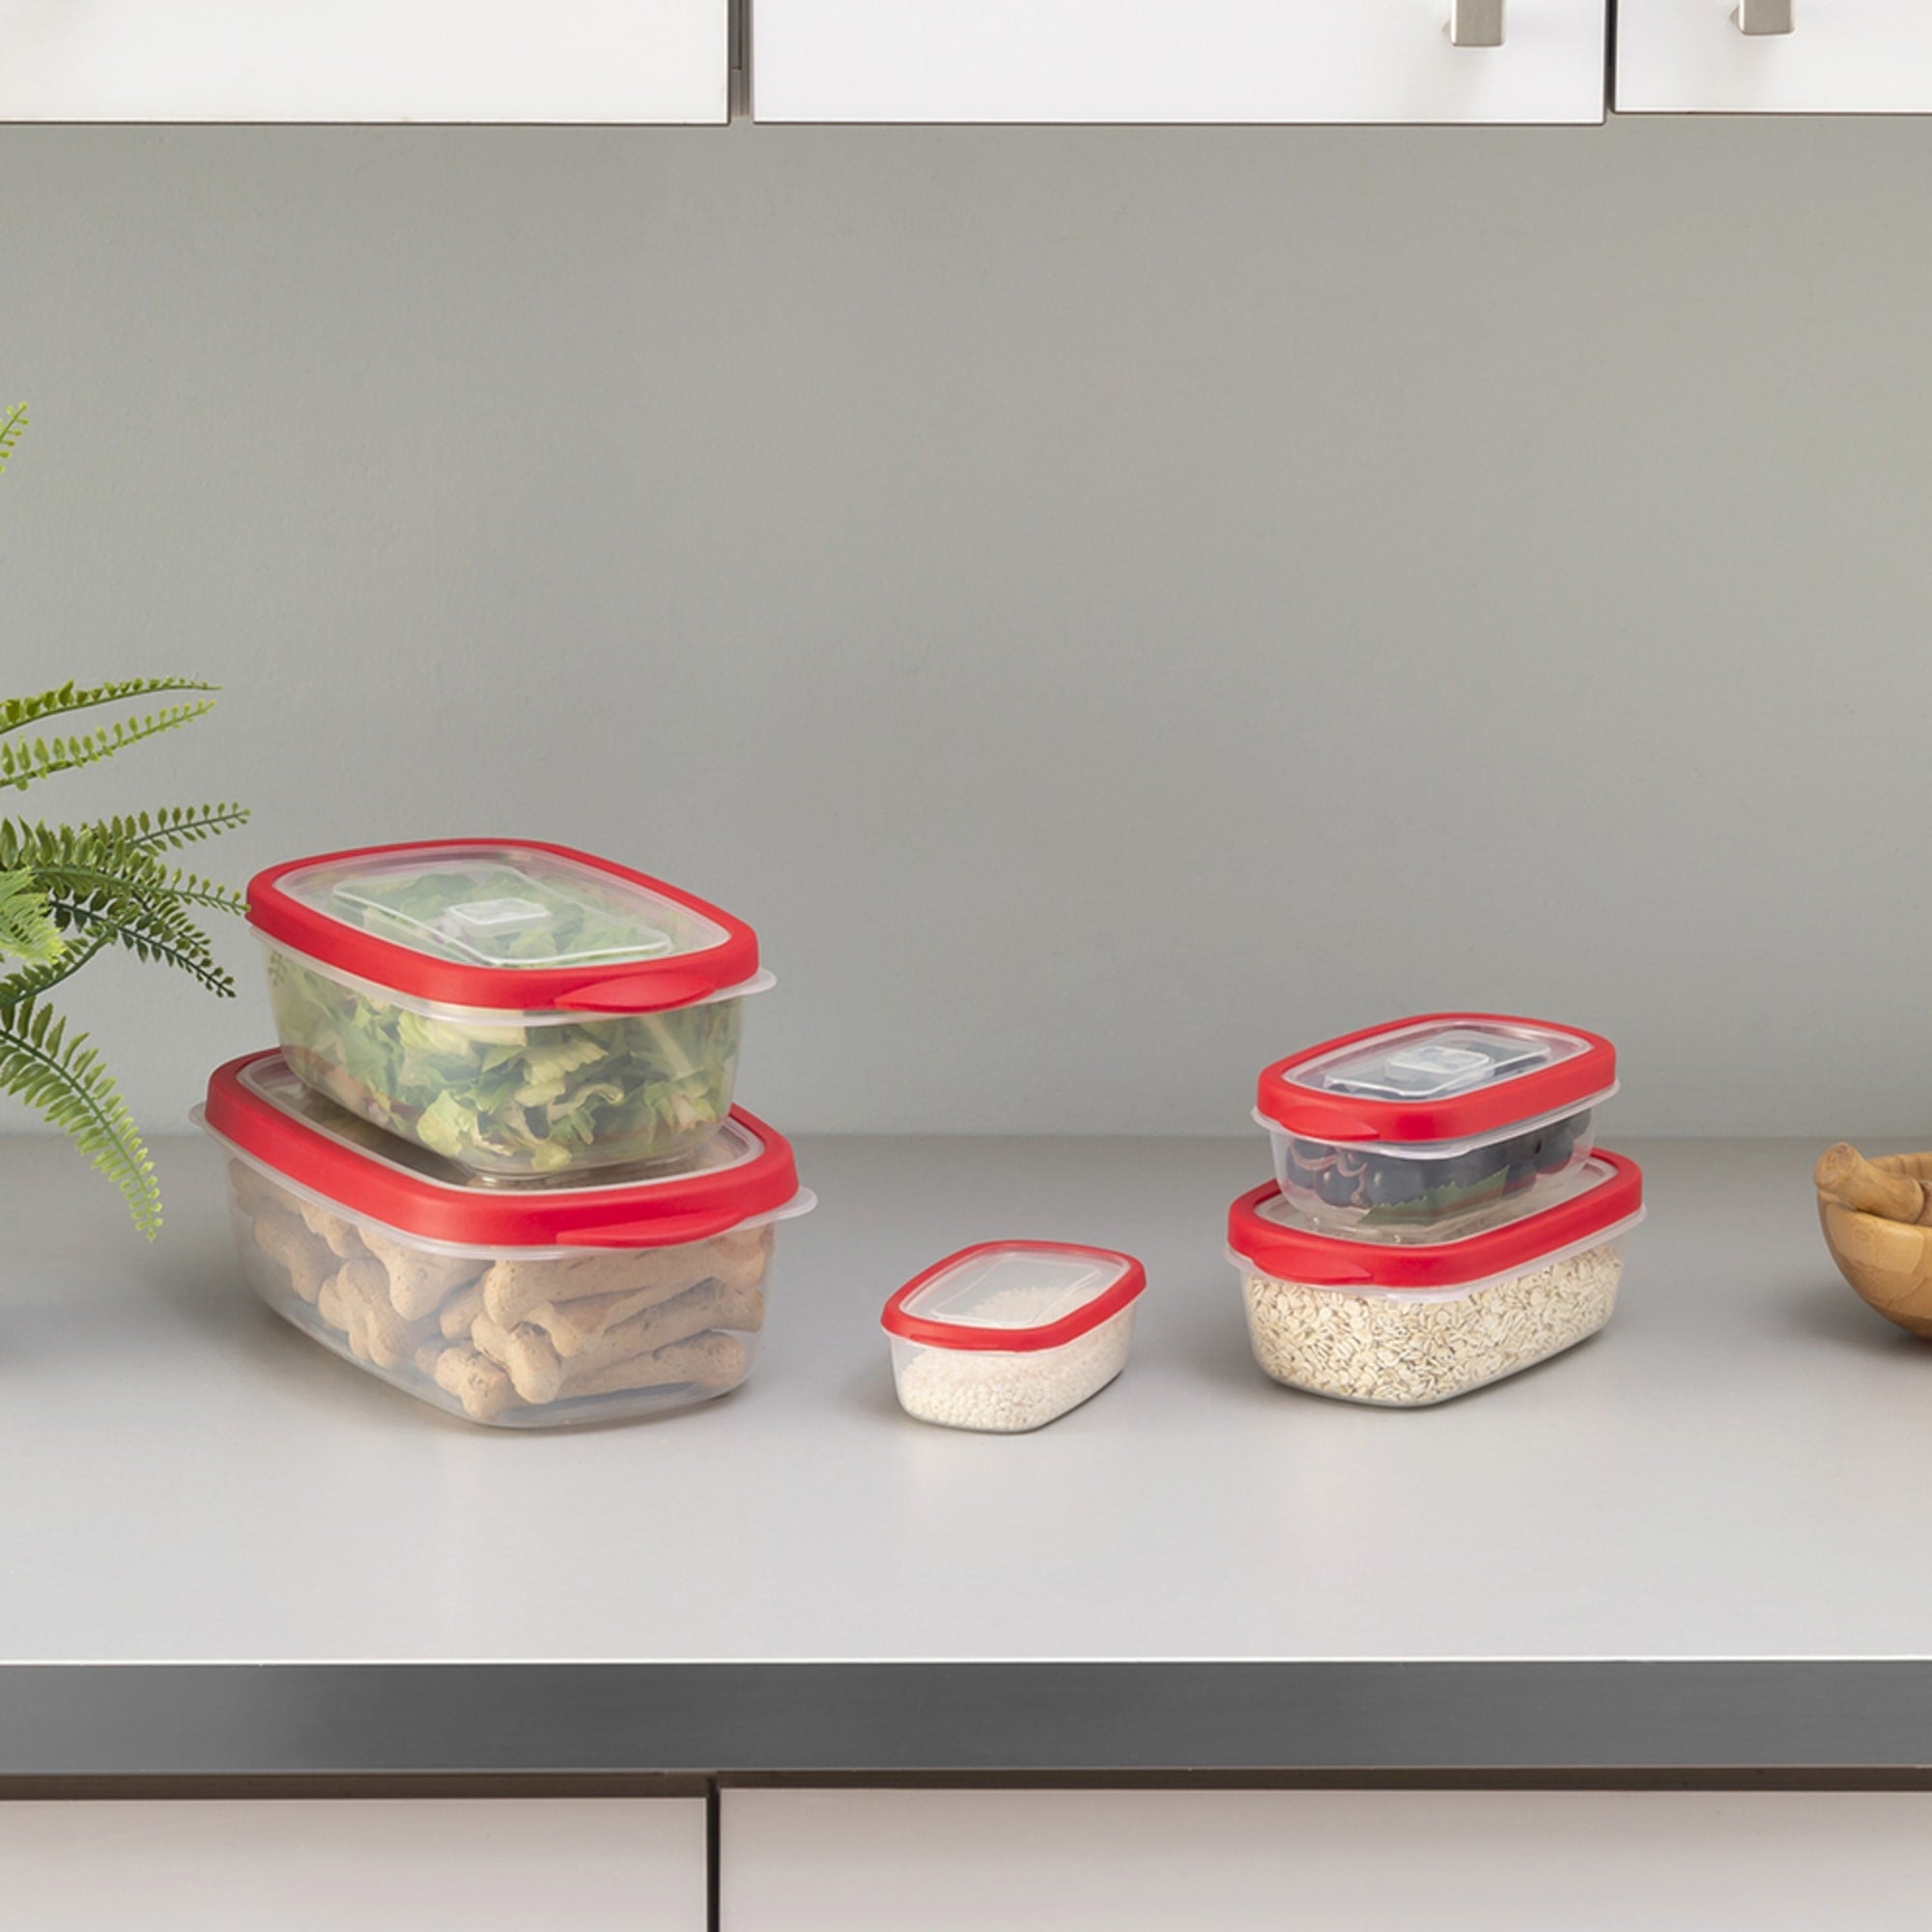 Home Basics 5 Piece Spill-Proof Rectangular Plastic Food Storage